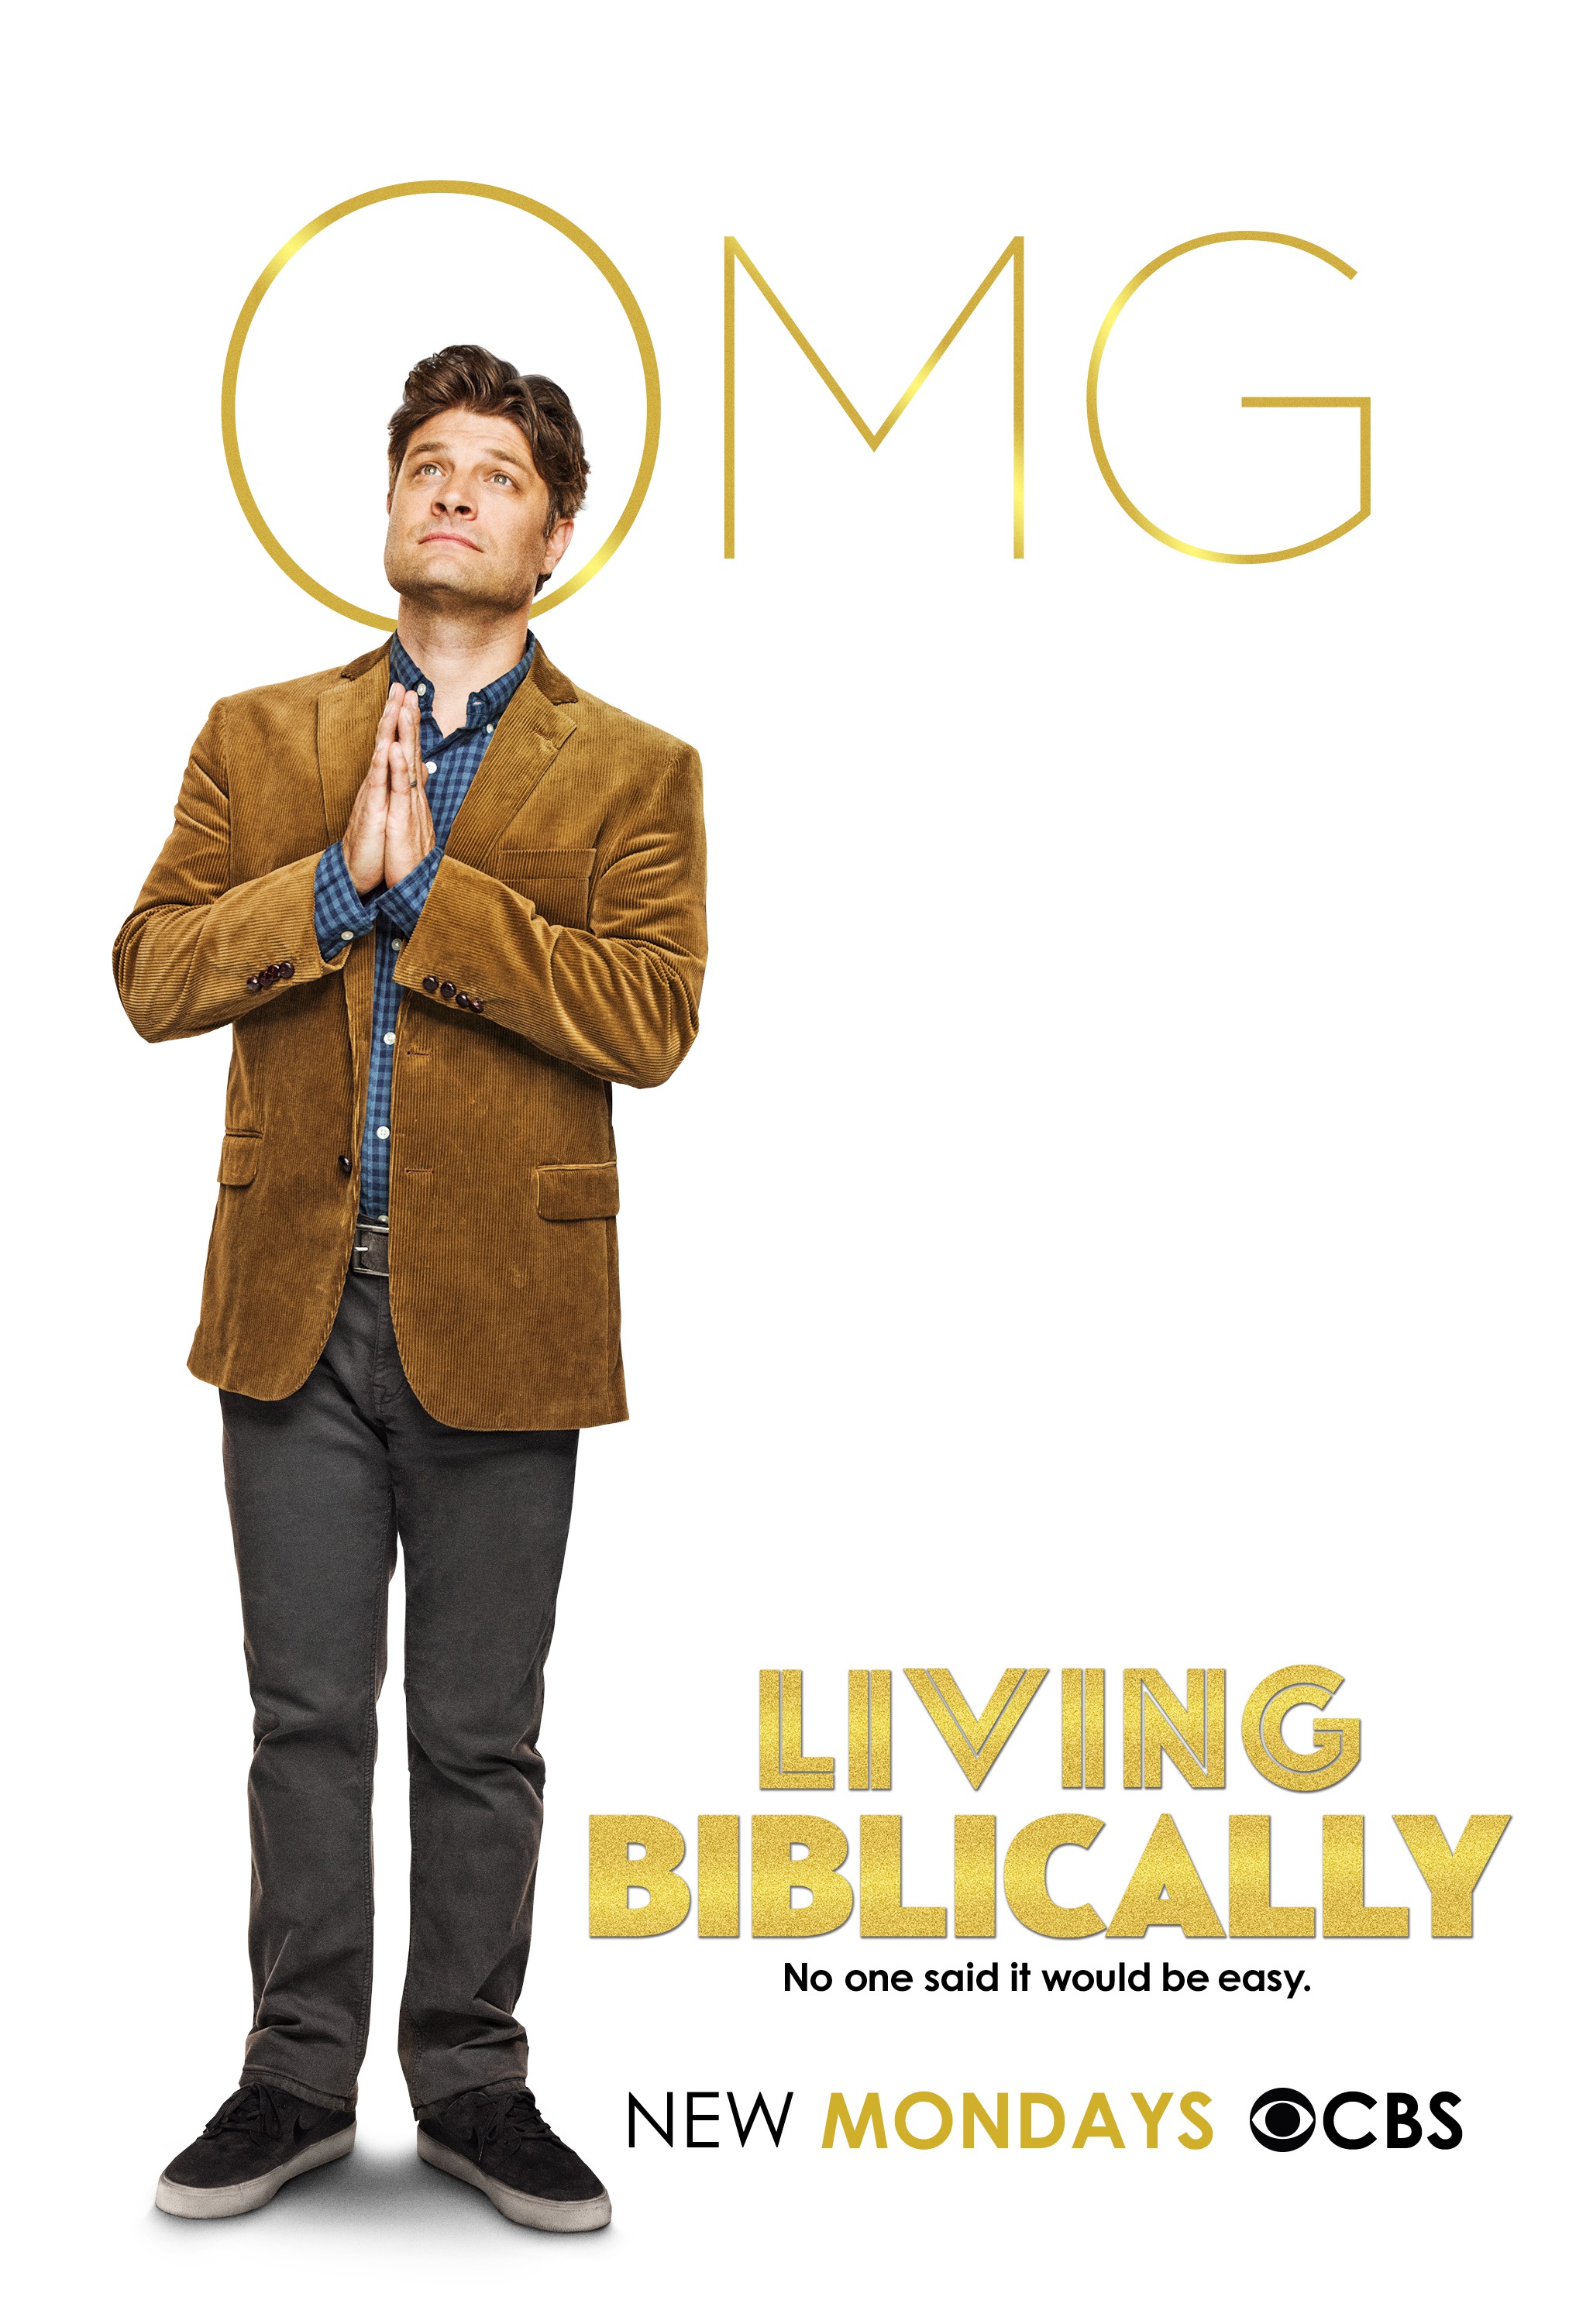 Mega Sized TV Poster Image for Living Biblically (#2 of 2)